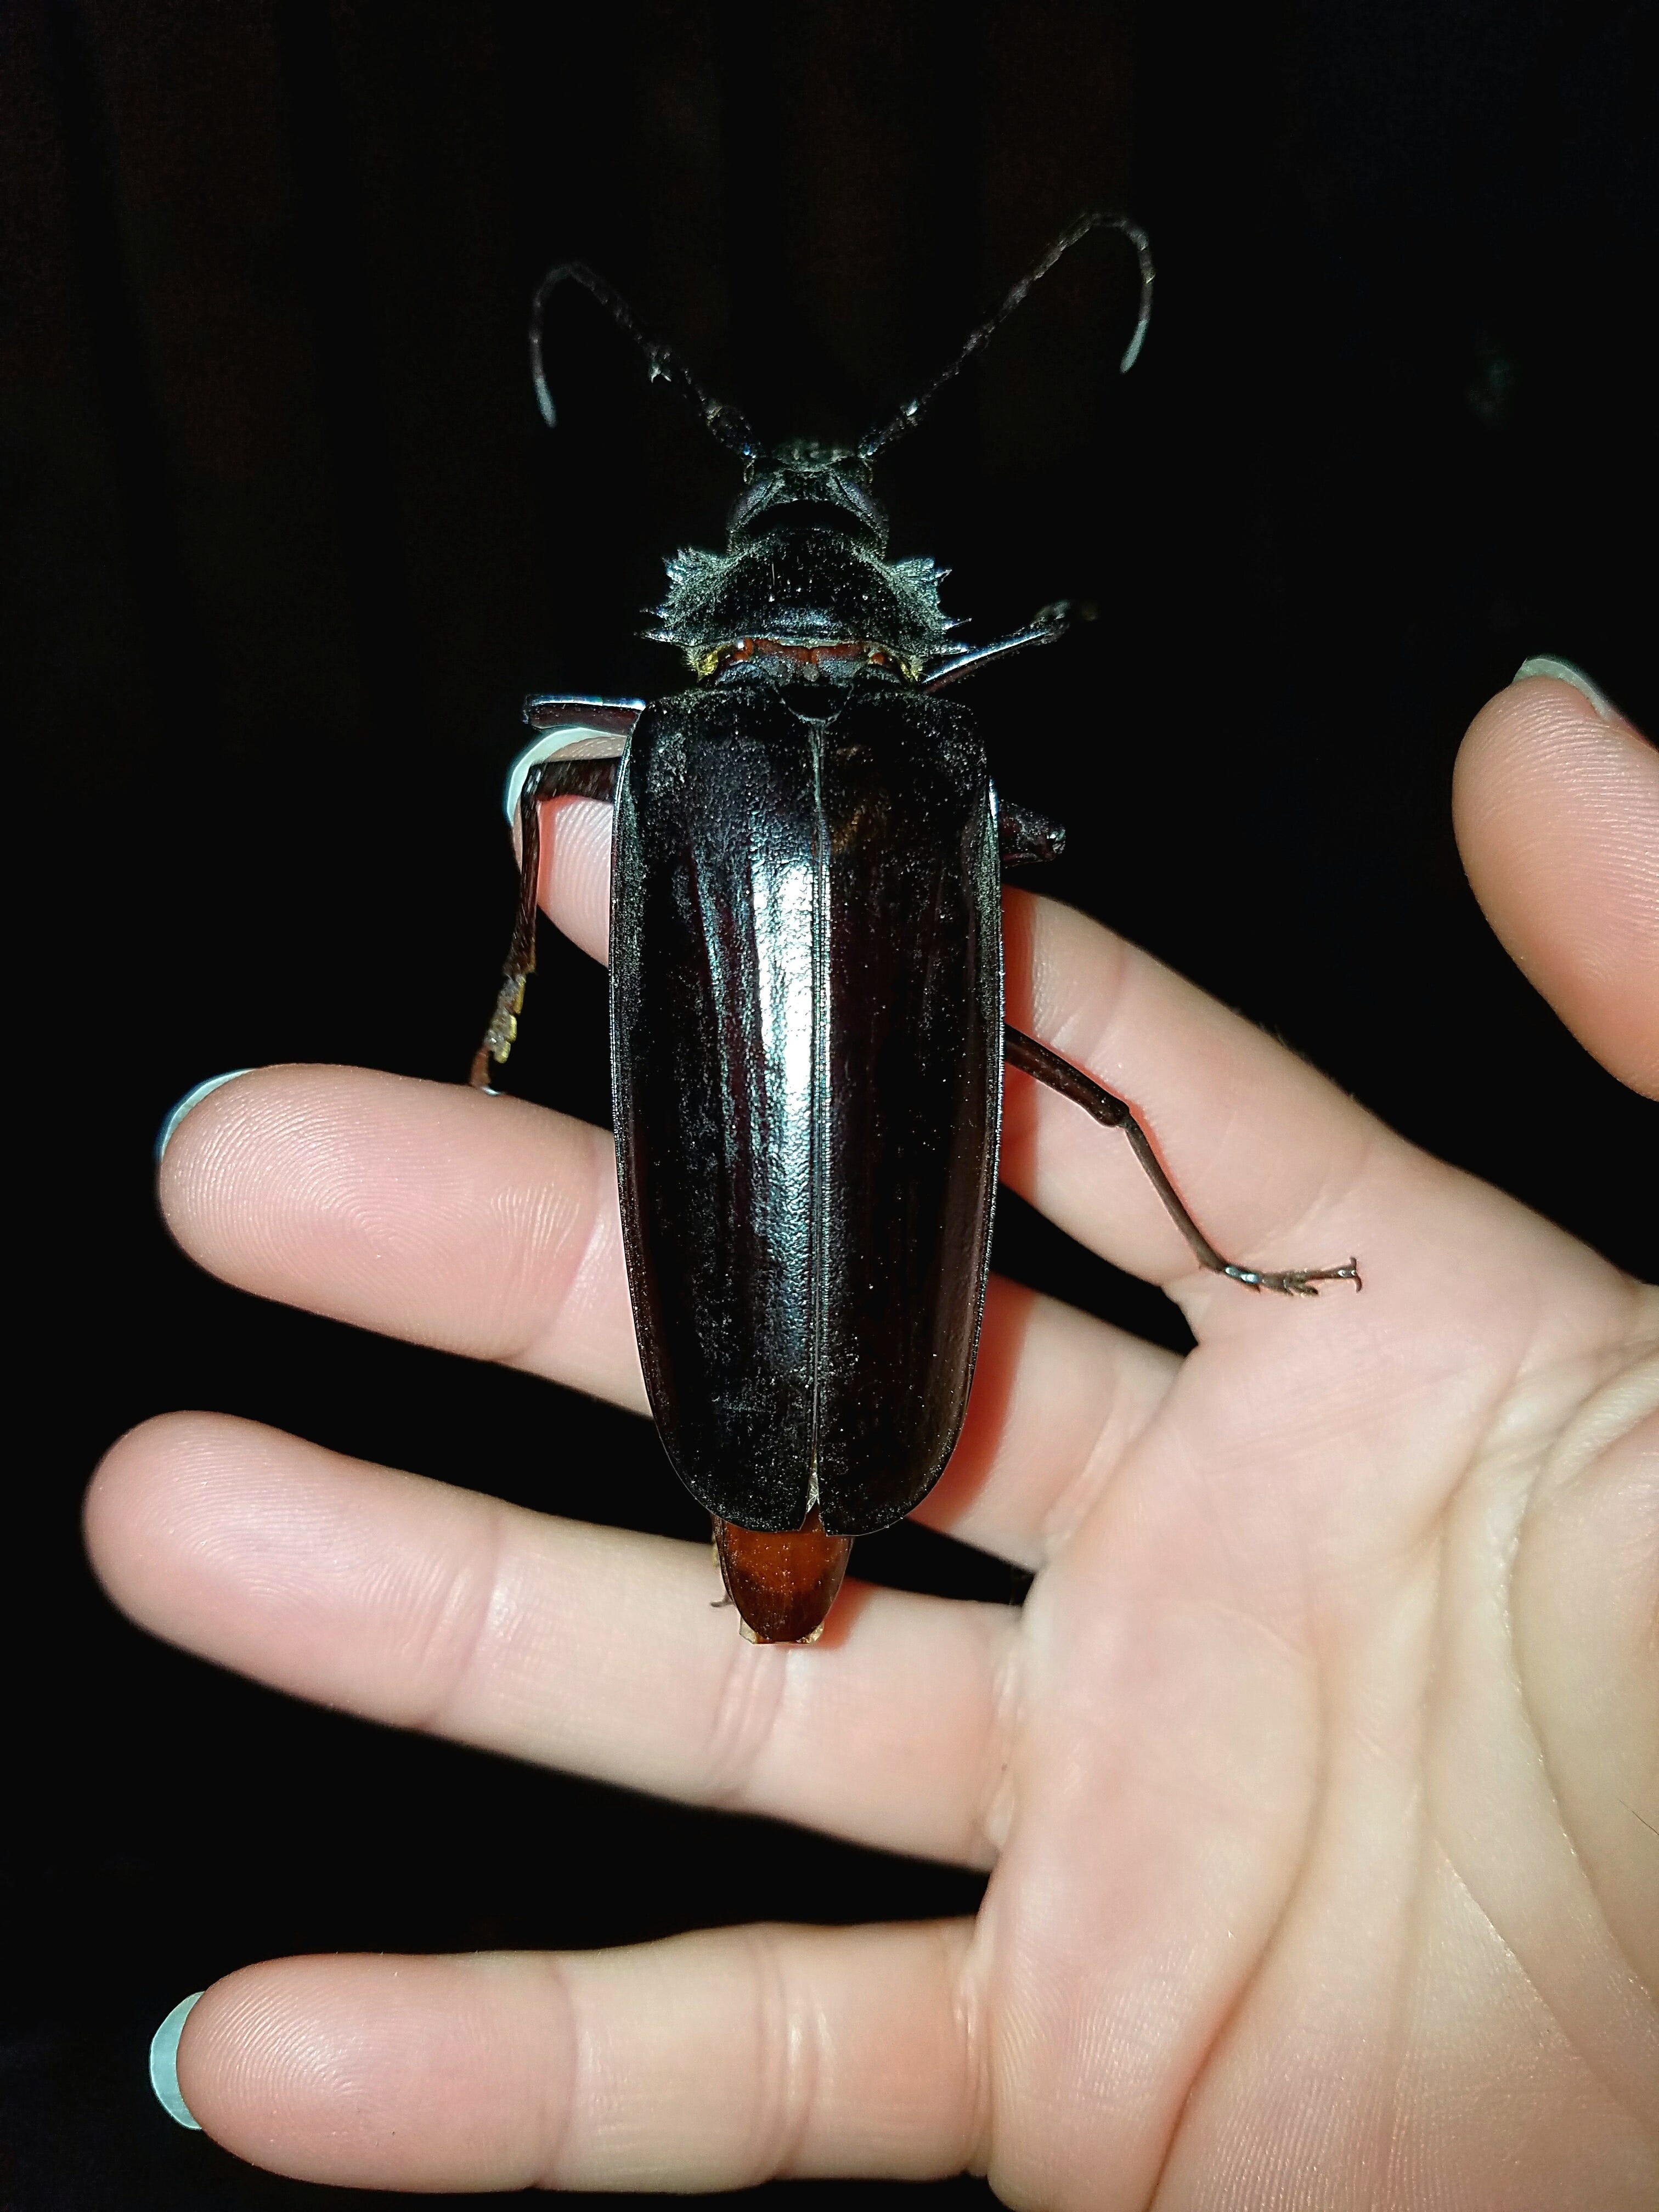 Giant flying beetles swarm Arizona in search of love